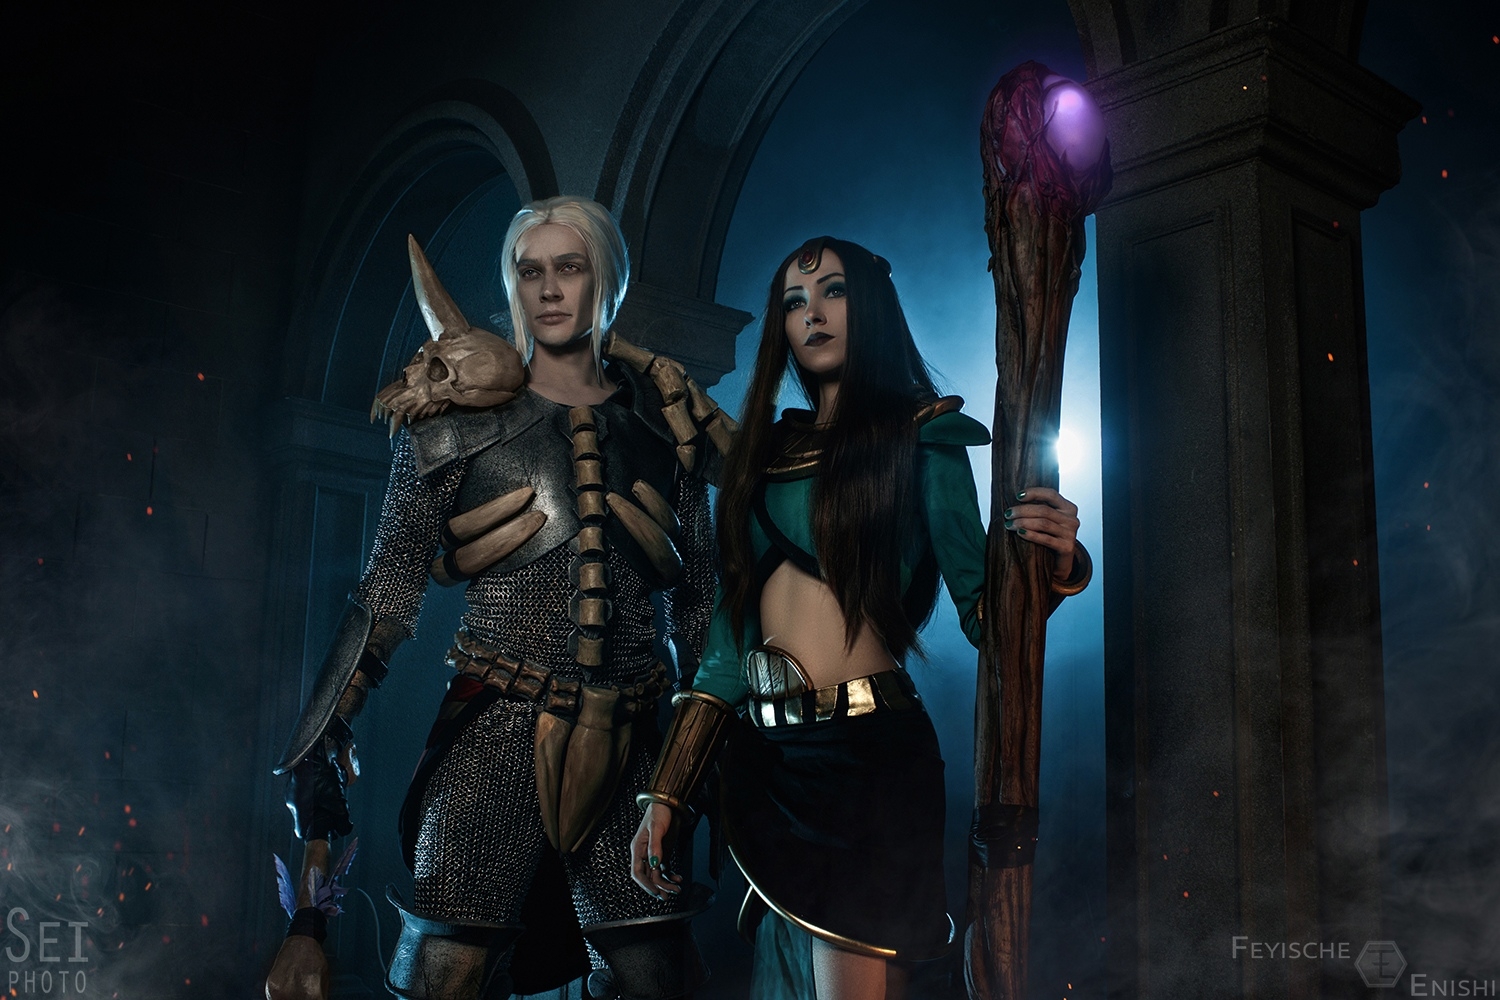 Necromancer and Sorceress